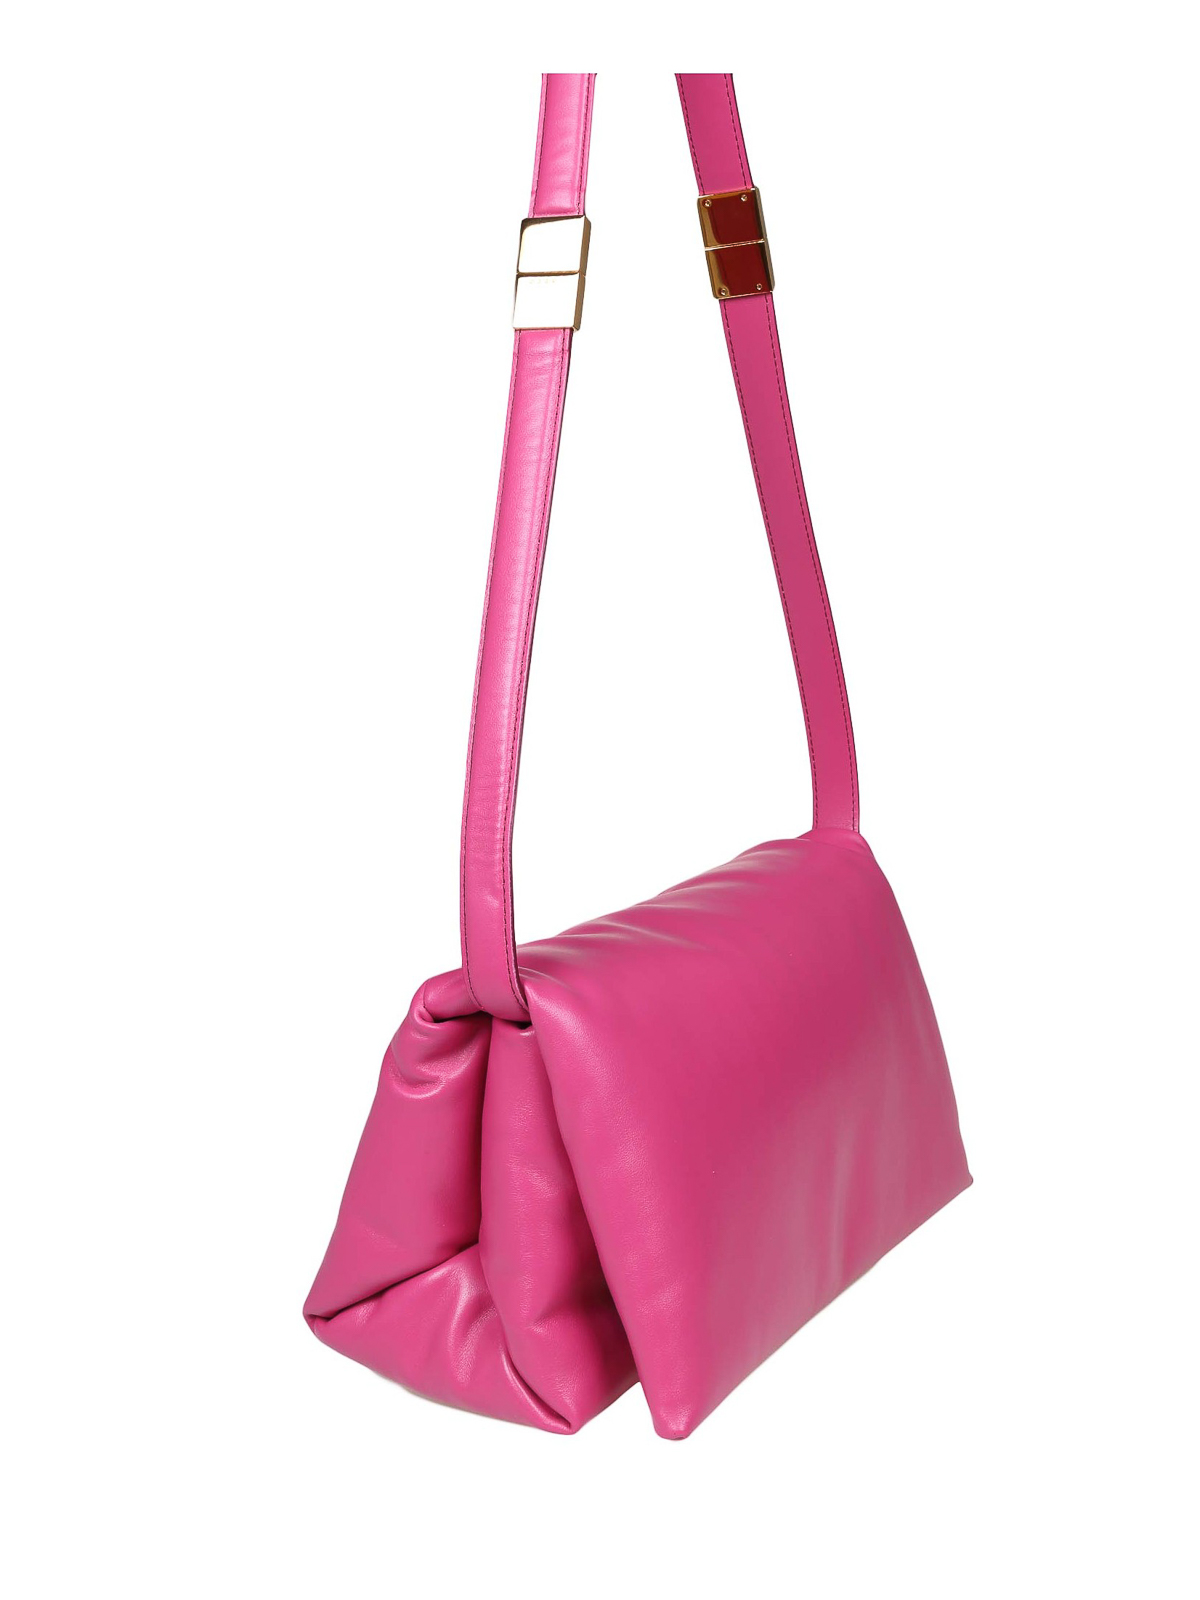 Prisma Mini Leather Shoulder Bag in Pink - Marni